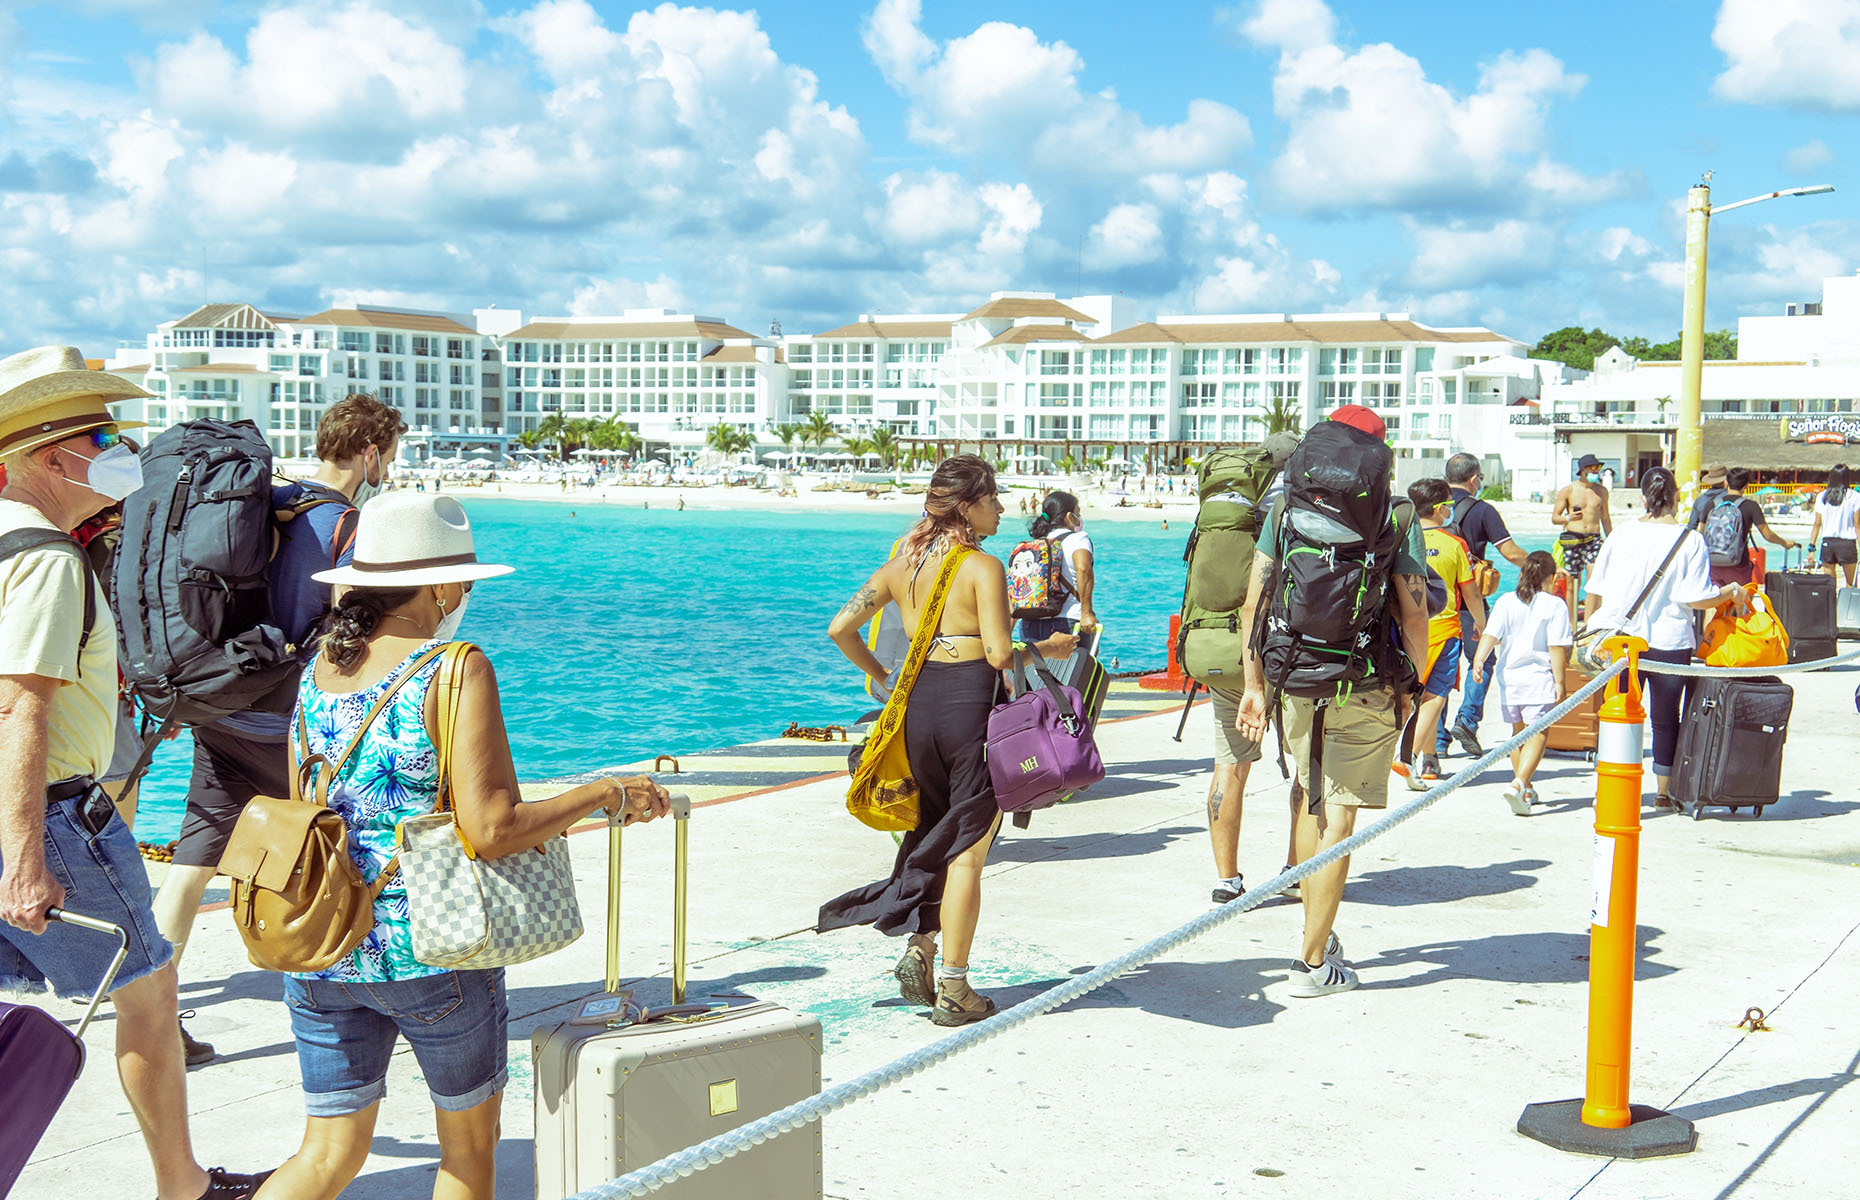 Tourists arriving at their holiday destination (Image: Semyon Nazarov/Shutterstock) 